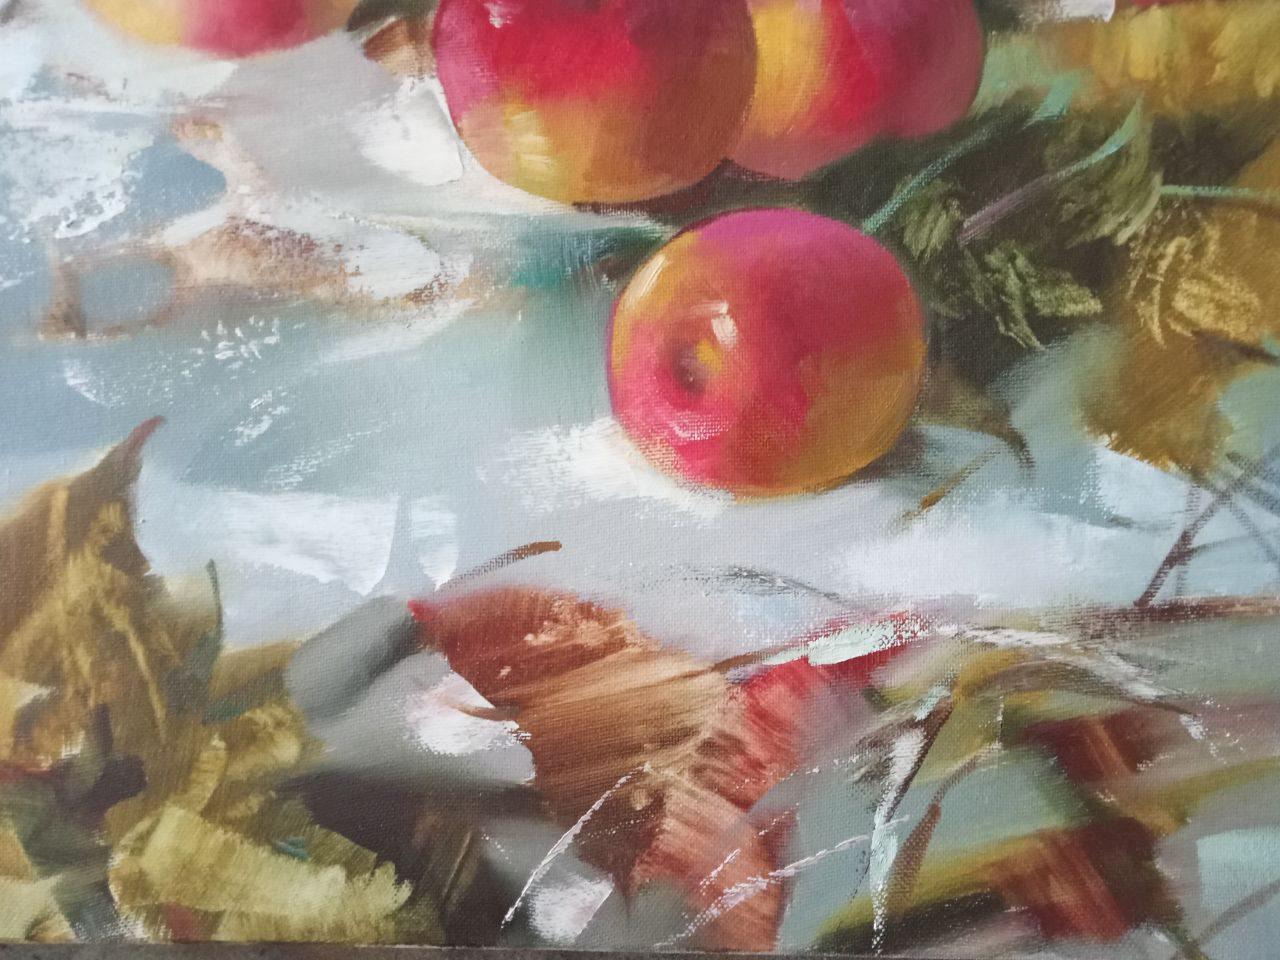 Artist: Anatoly Borisovich Tarabanov
Work: Original oil painting, handmade artwork, one of a kind 
Medium: Oil on Canvas 
Year: 2010
Style: Classic Art
Title: Apples in the Snow
Size: 23.5